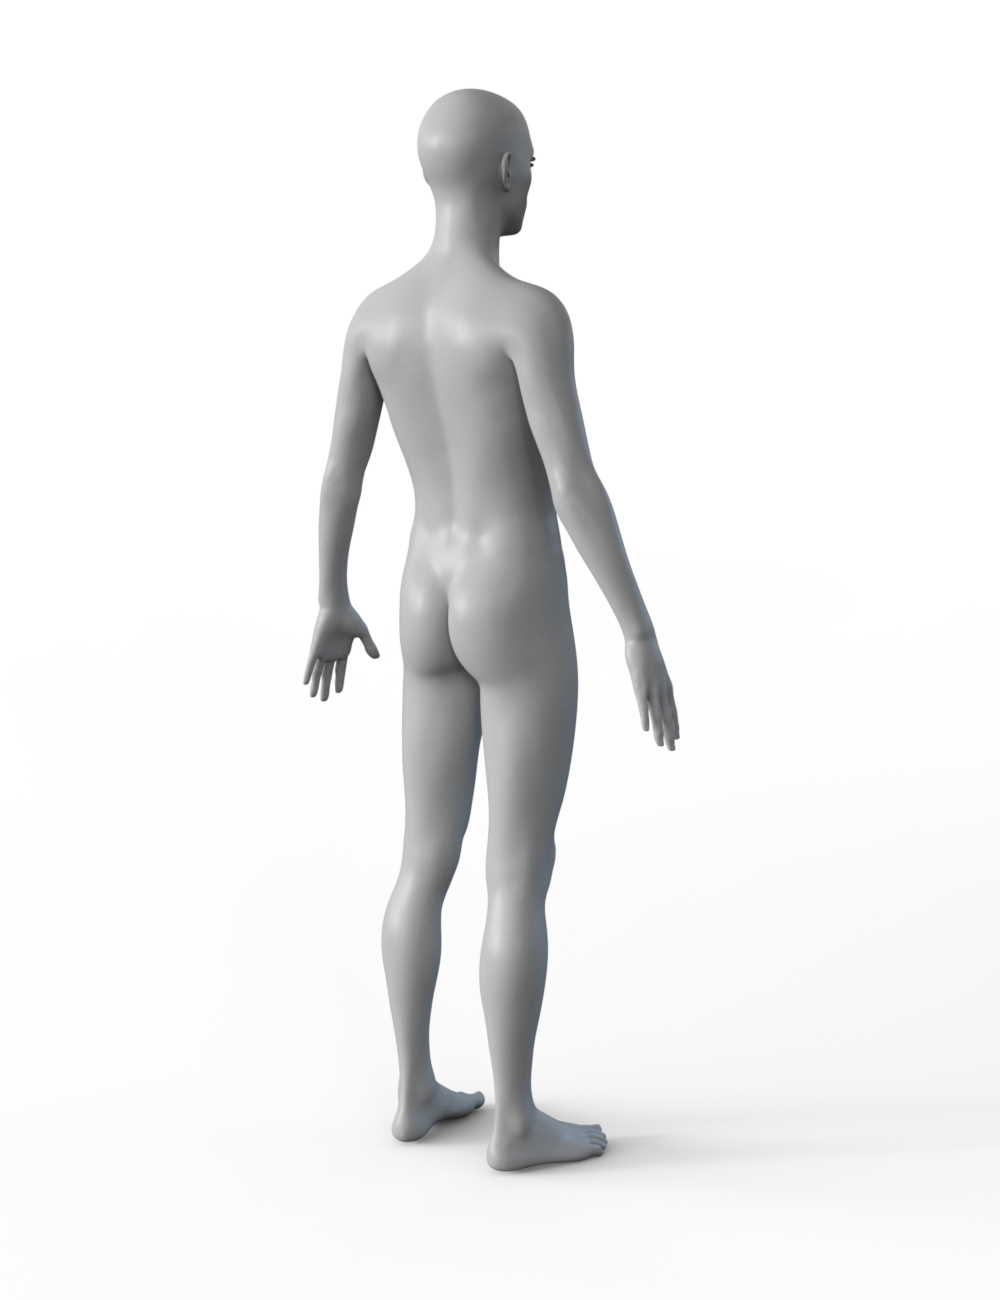 FBX- Lee Slacker Outfit by: Paleo, 3D Models by Daz 3D